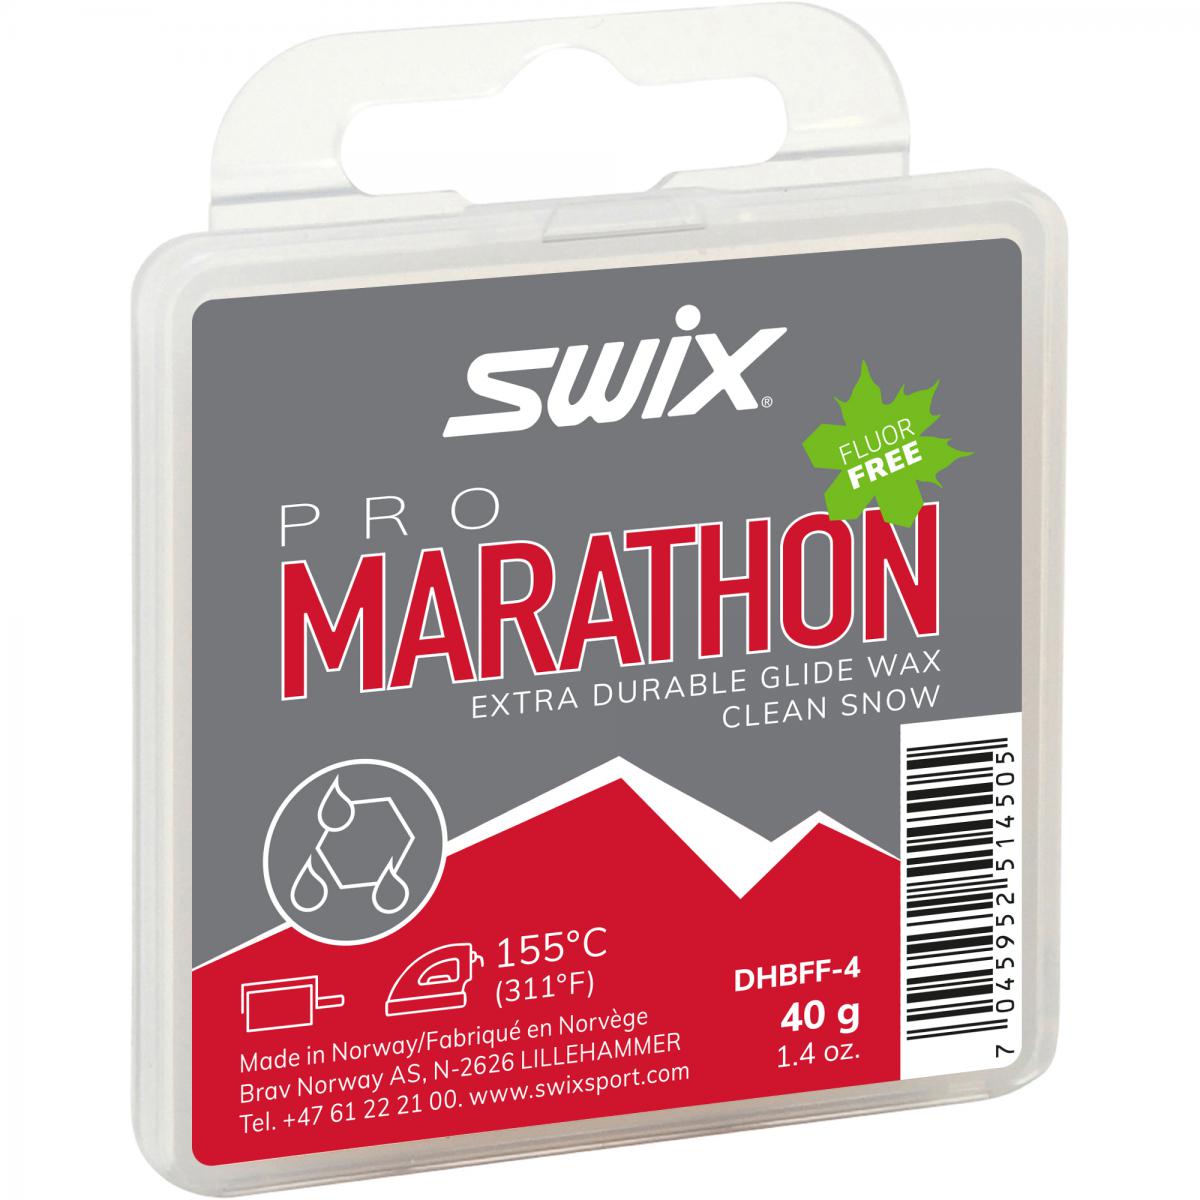 Swix  DHBFF-4 Marathon Black, 40g